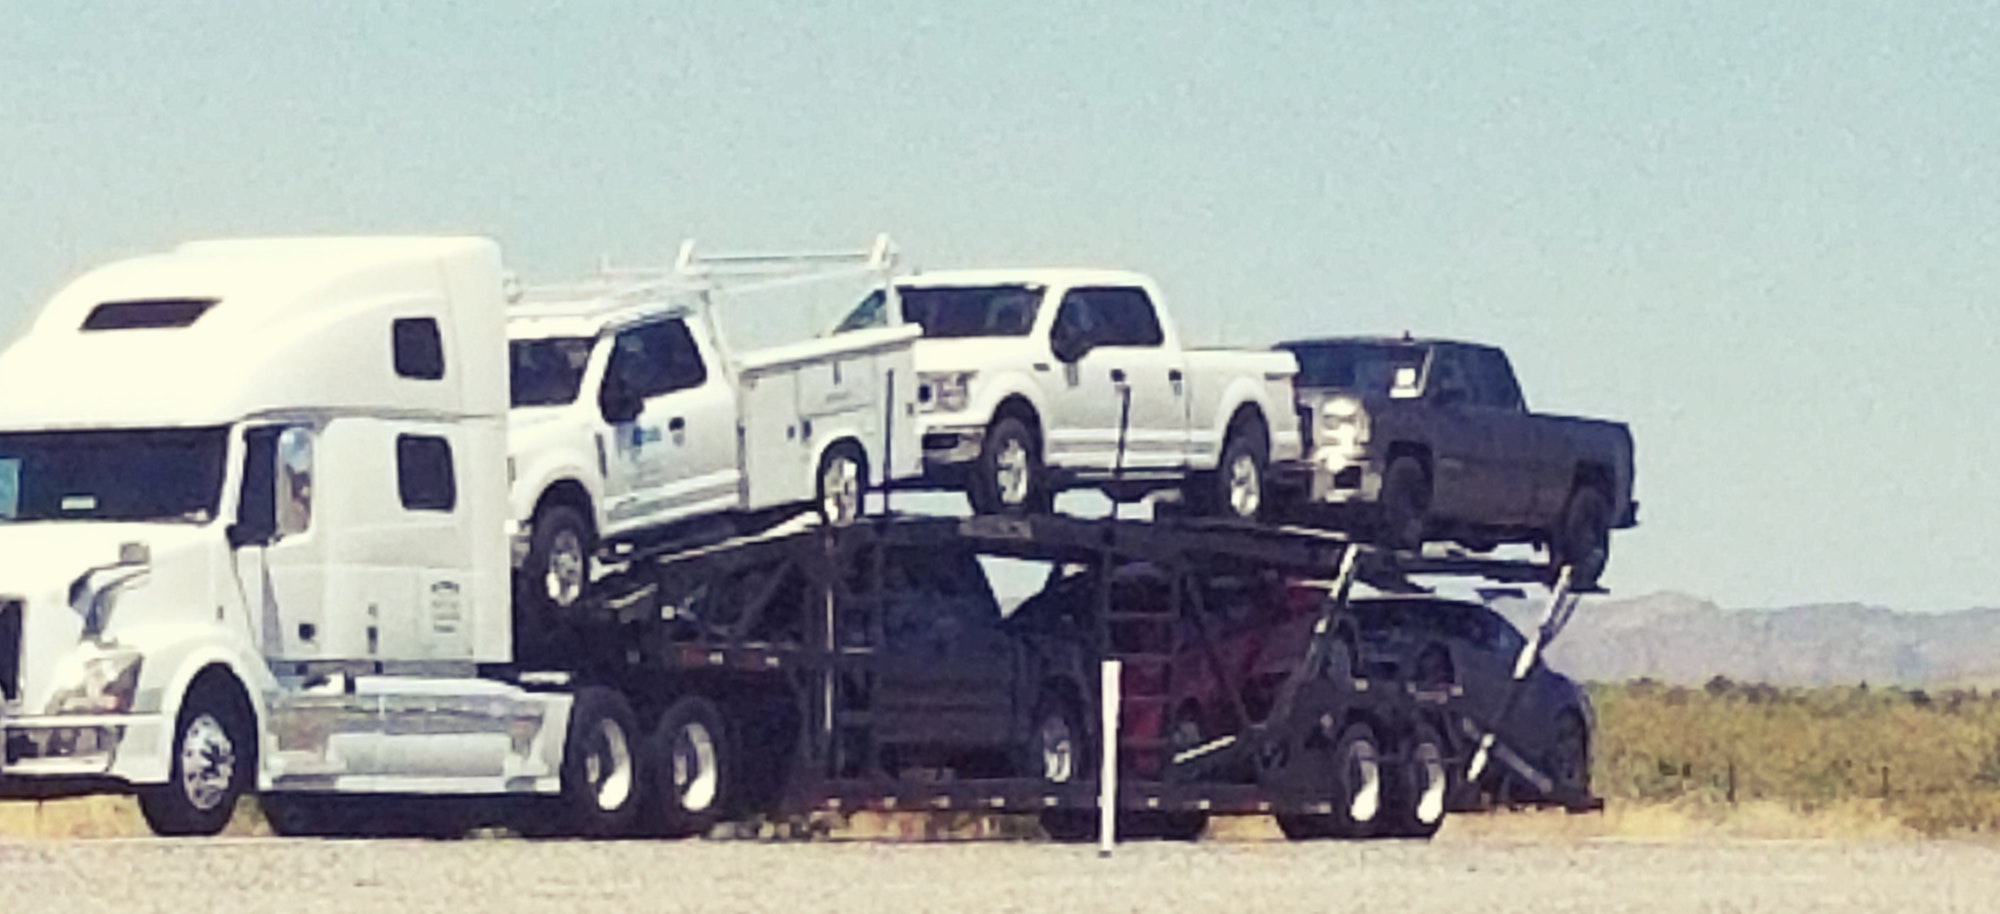 Big Rig Semi Truck Hauling Car Hauler Trailer Filled with Pick Up Trucks!